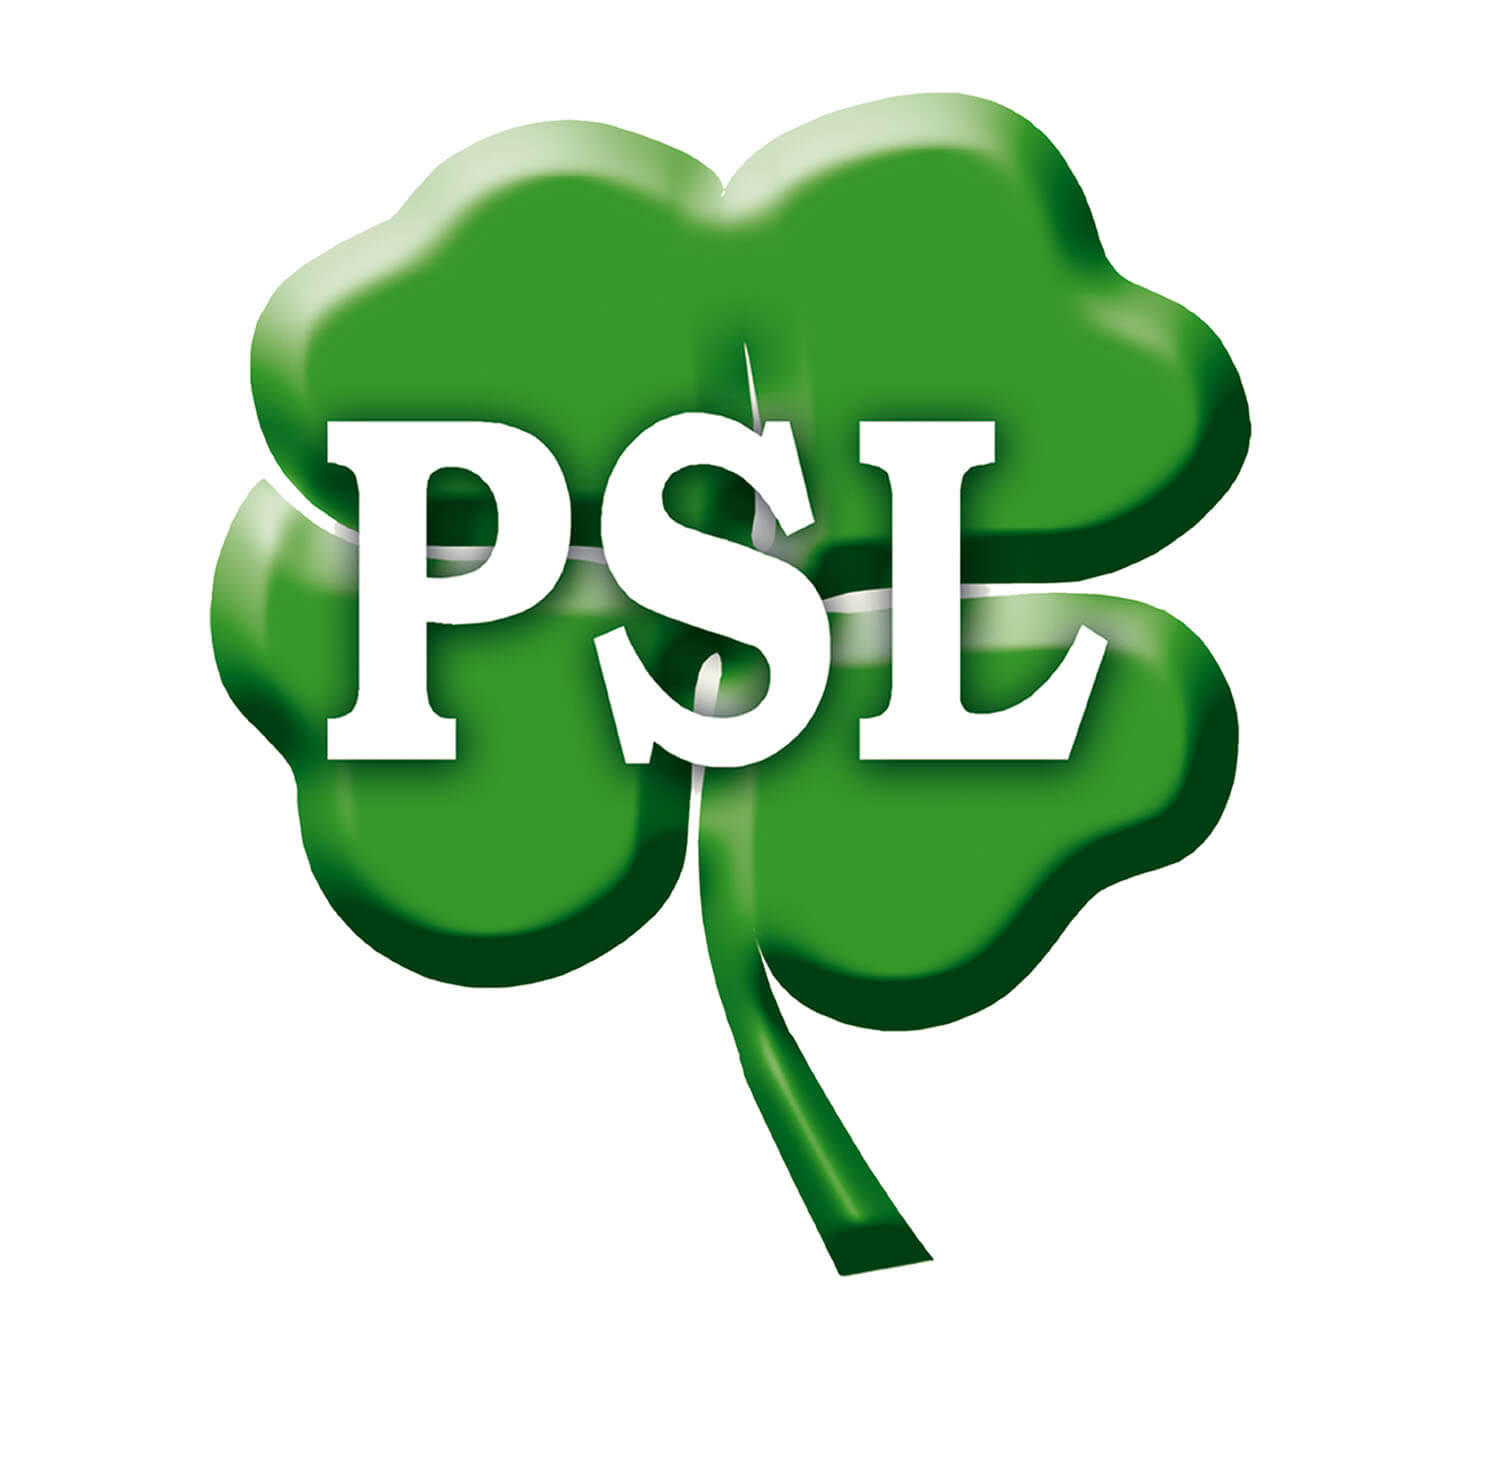 PSL-logo